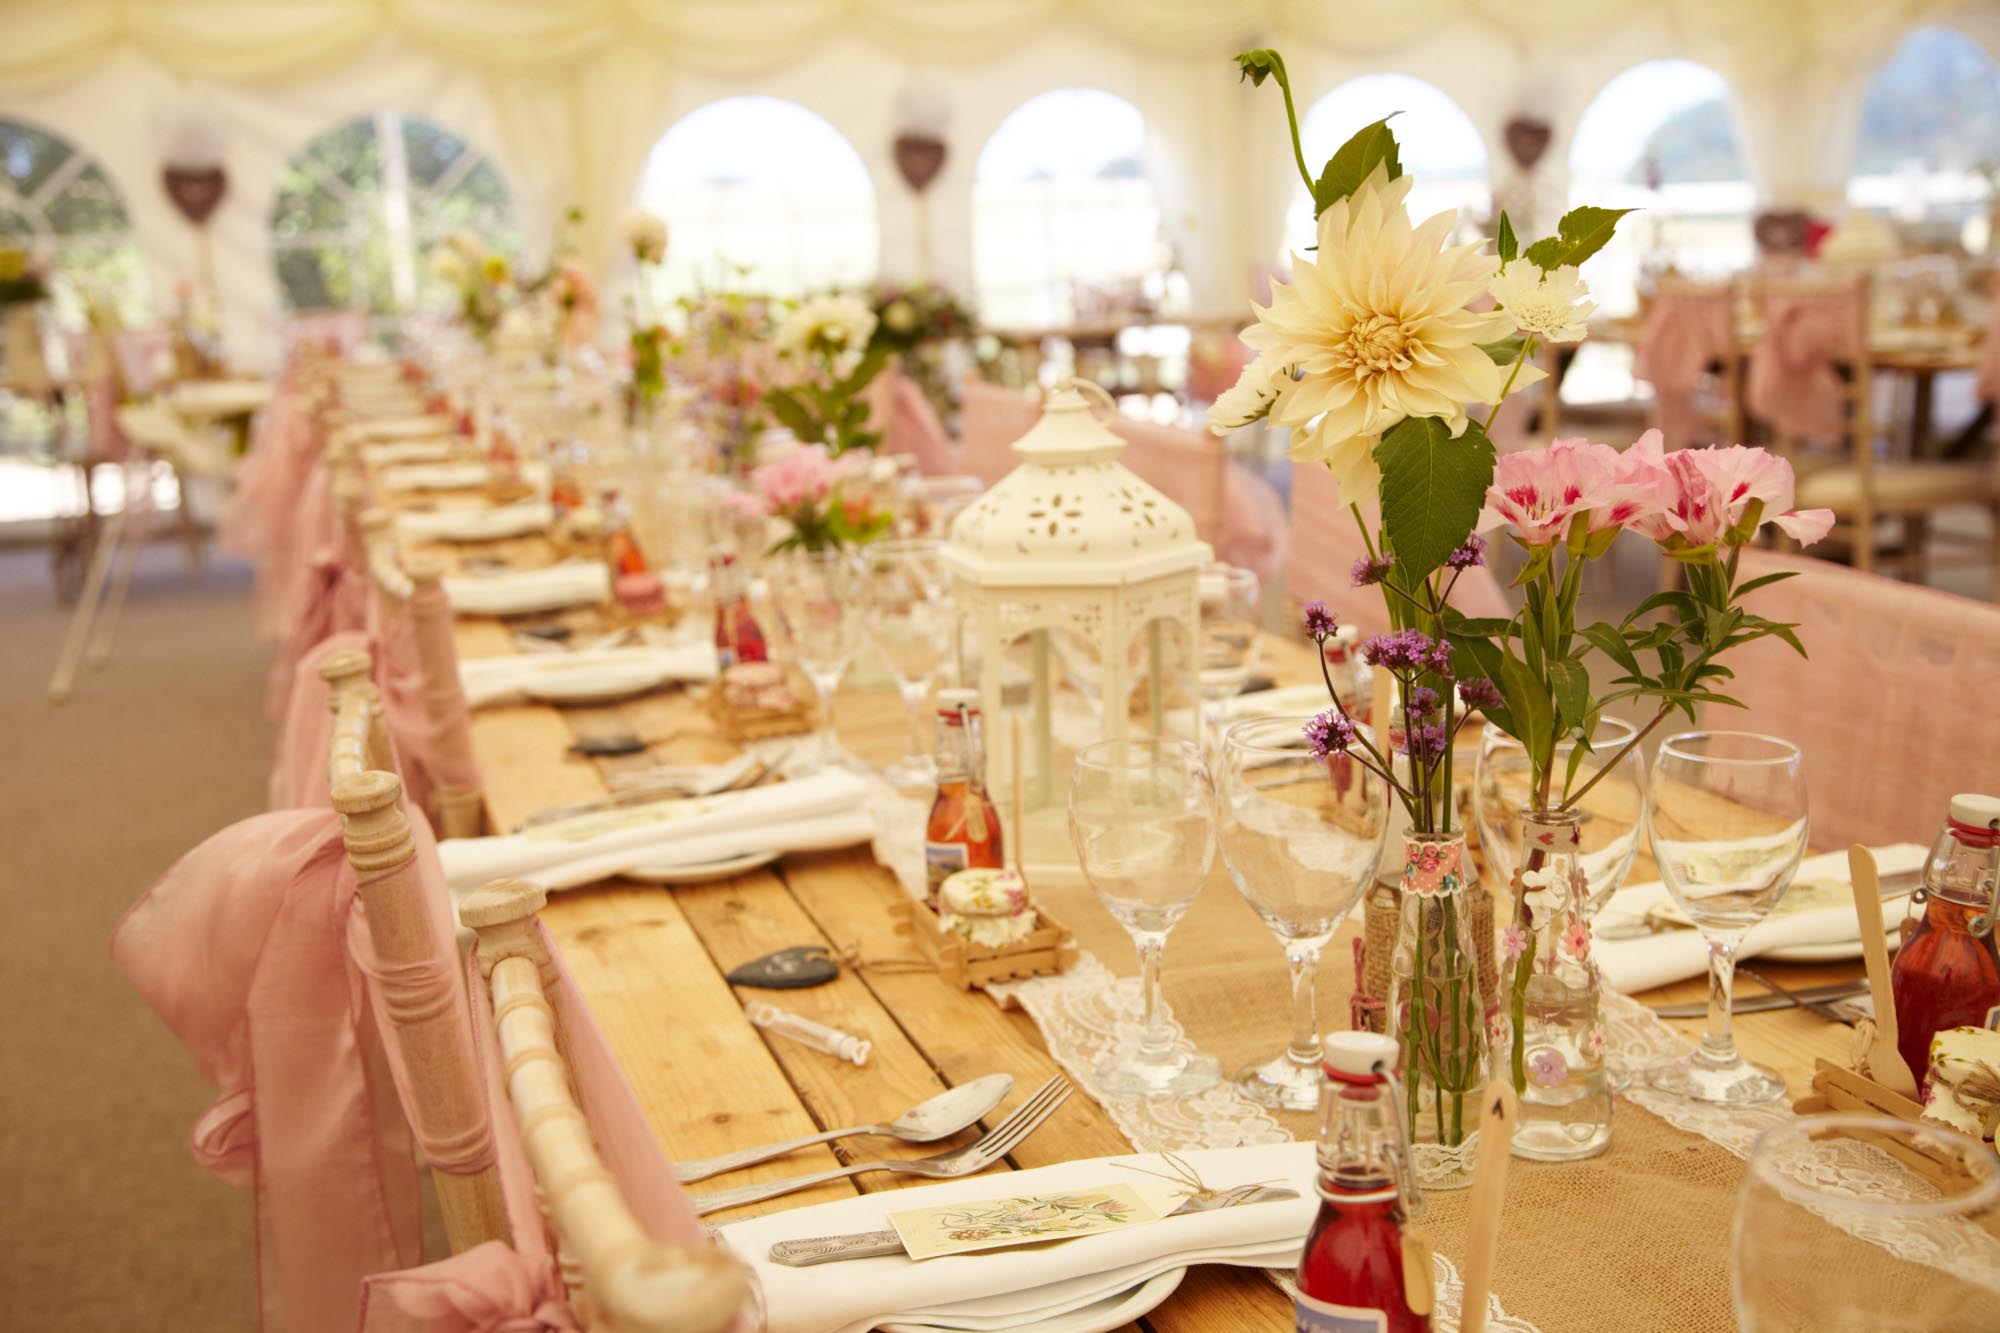 Wedding Reception Table Details at Huntstile Farm